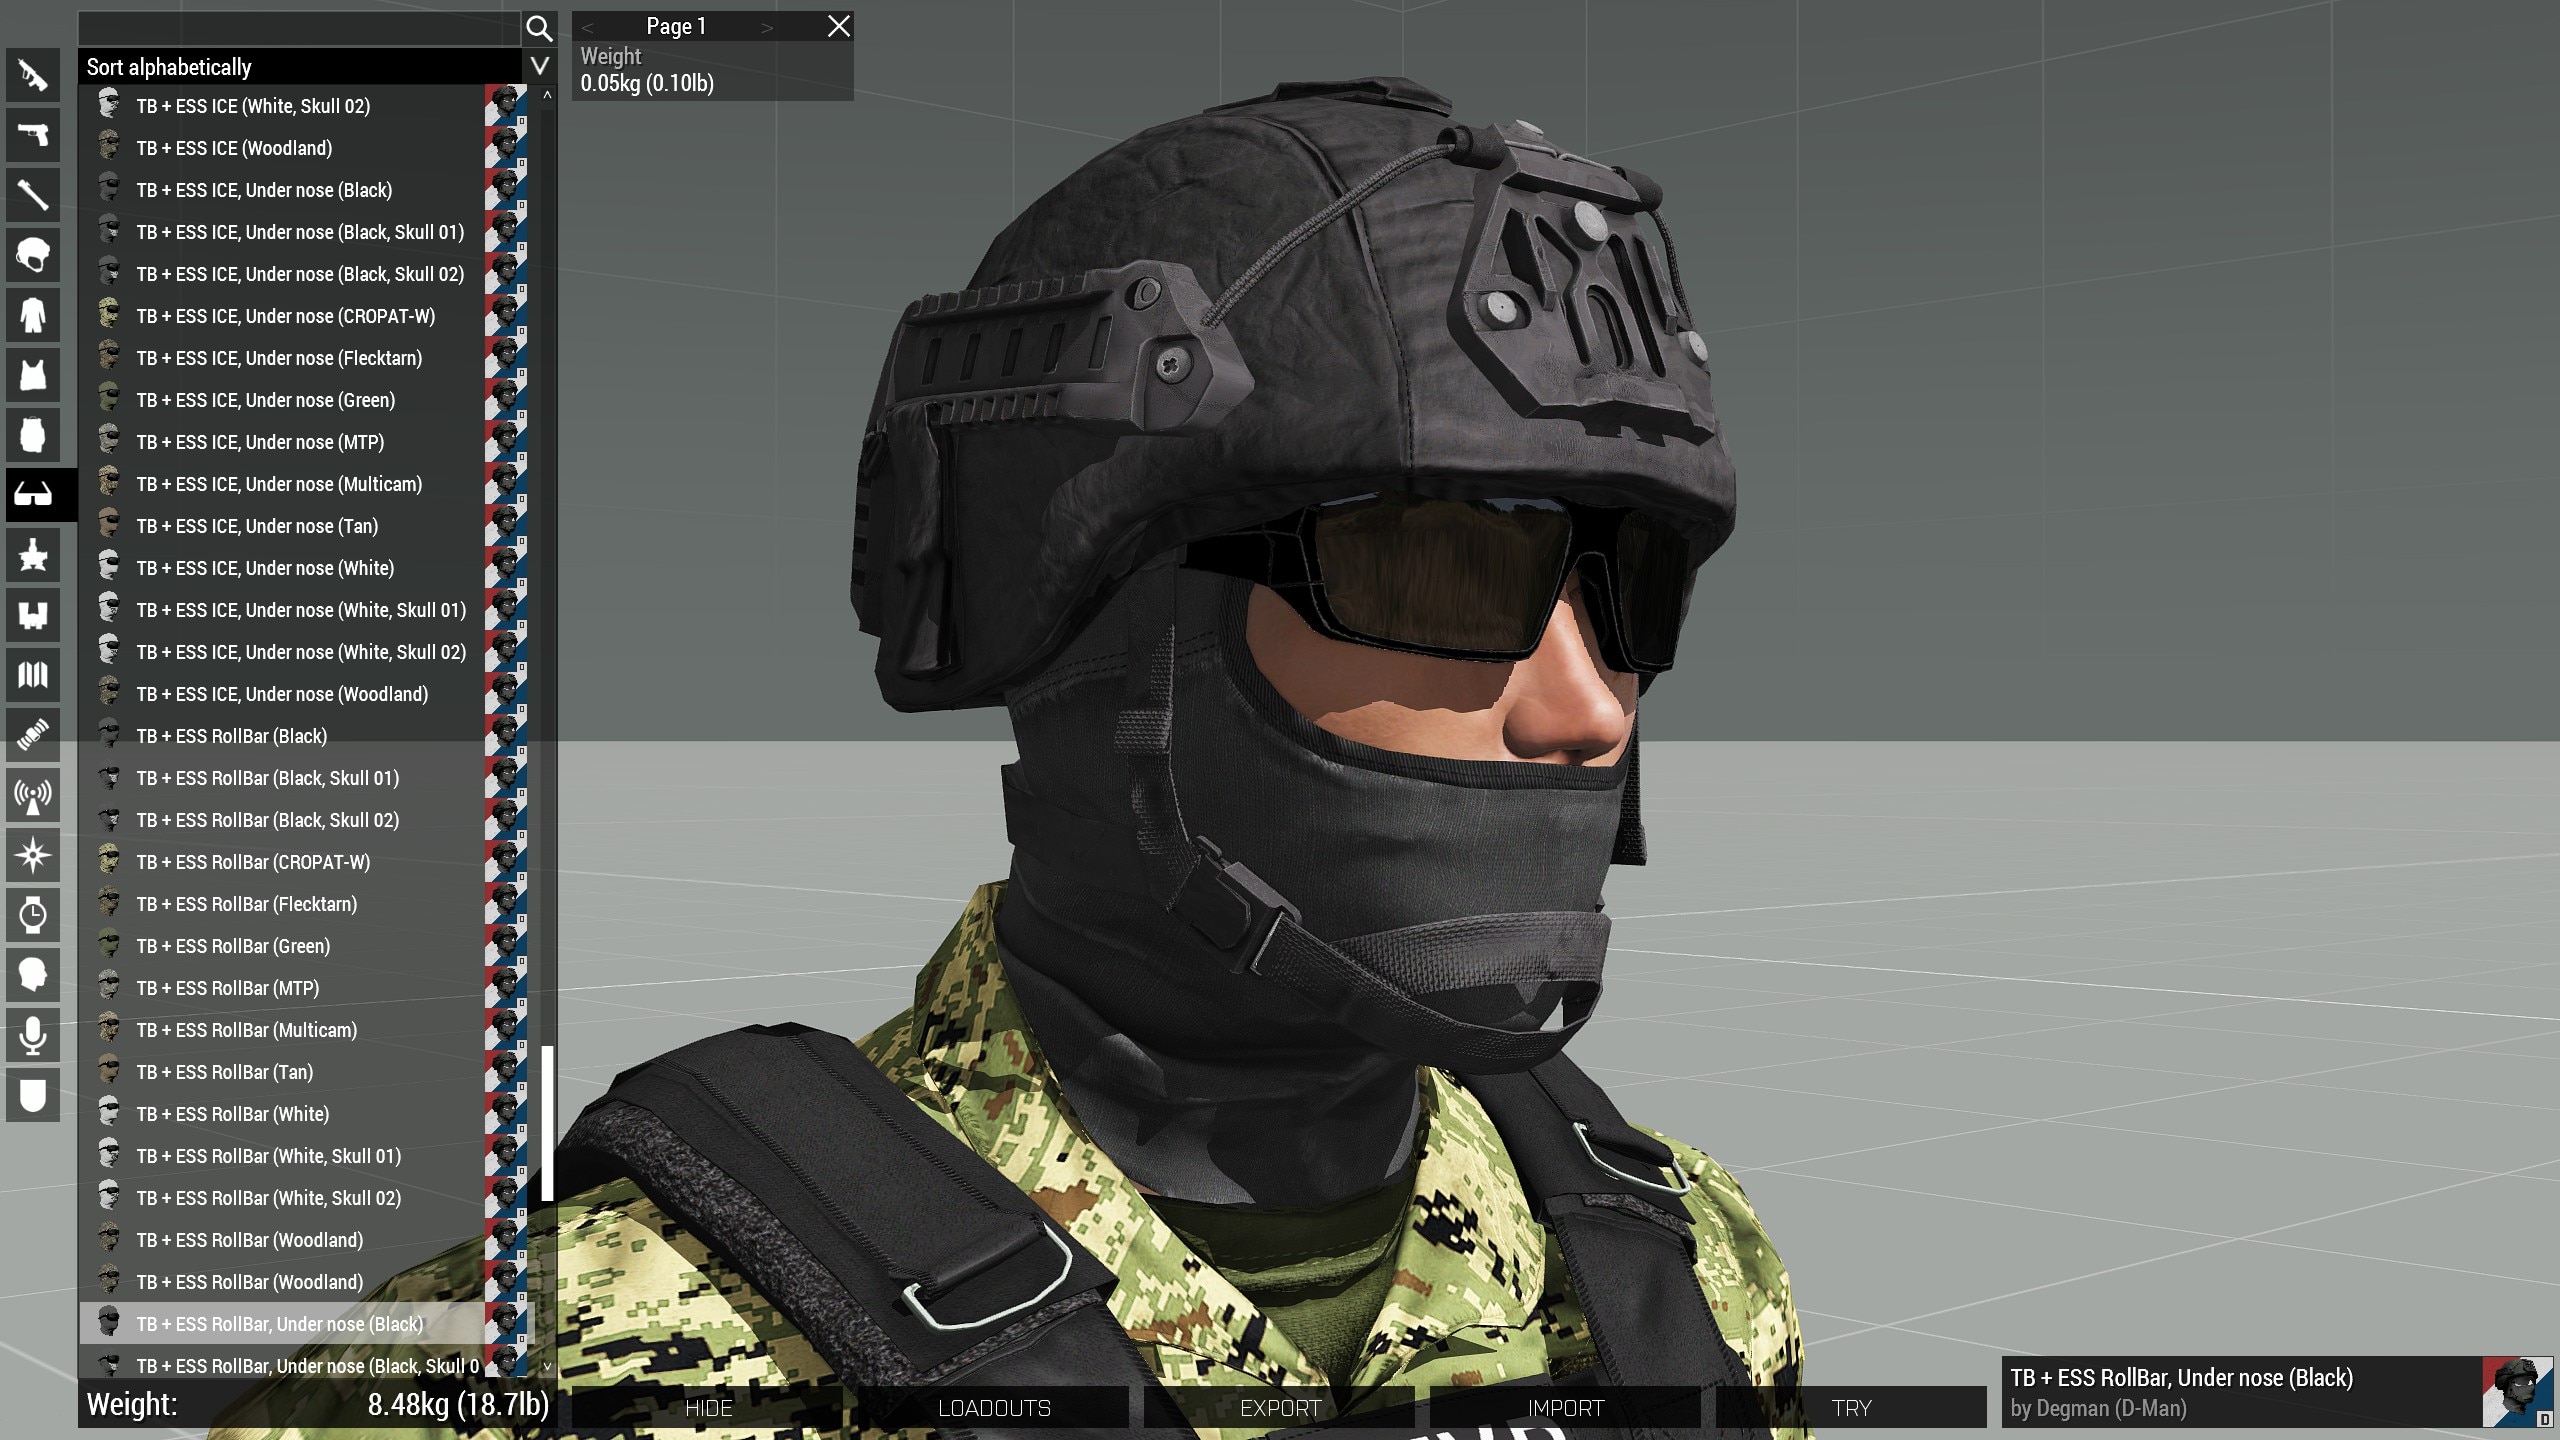 ARMA 3 Mod Bohemia Interactive Helmet Casco De Combate PNG, Clipart, Addon,  Air Gun, Arma, Arma